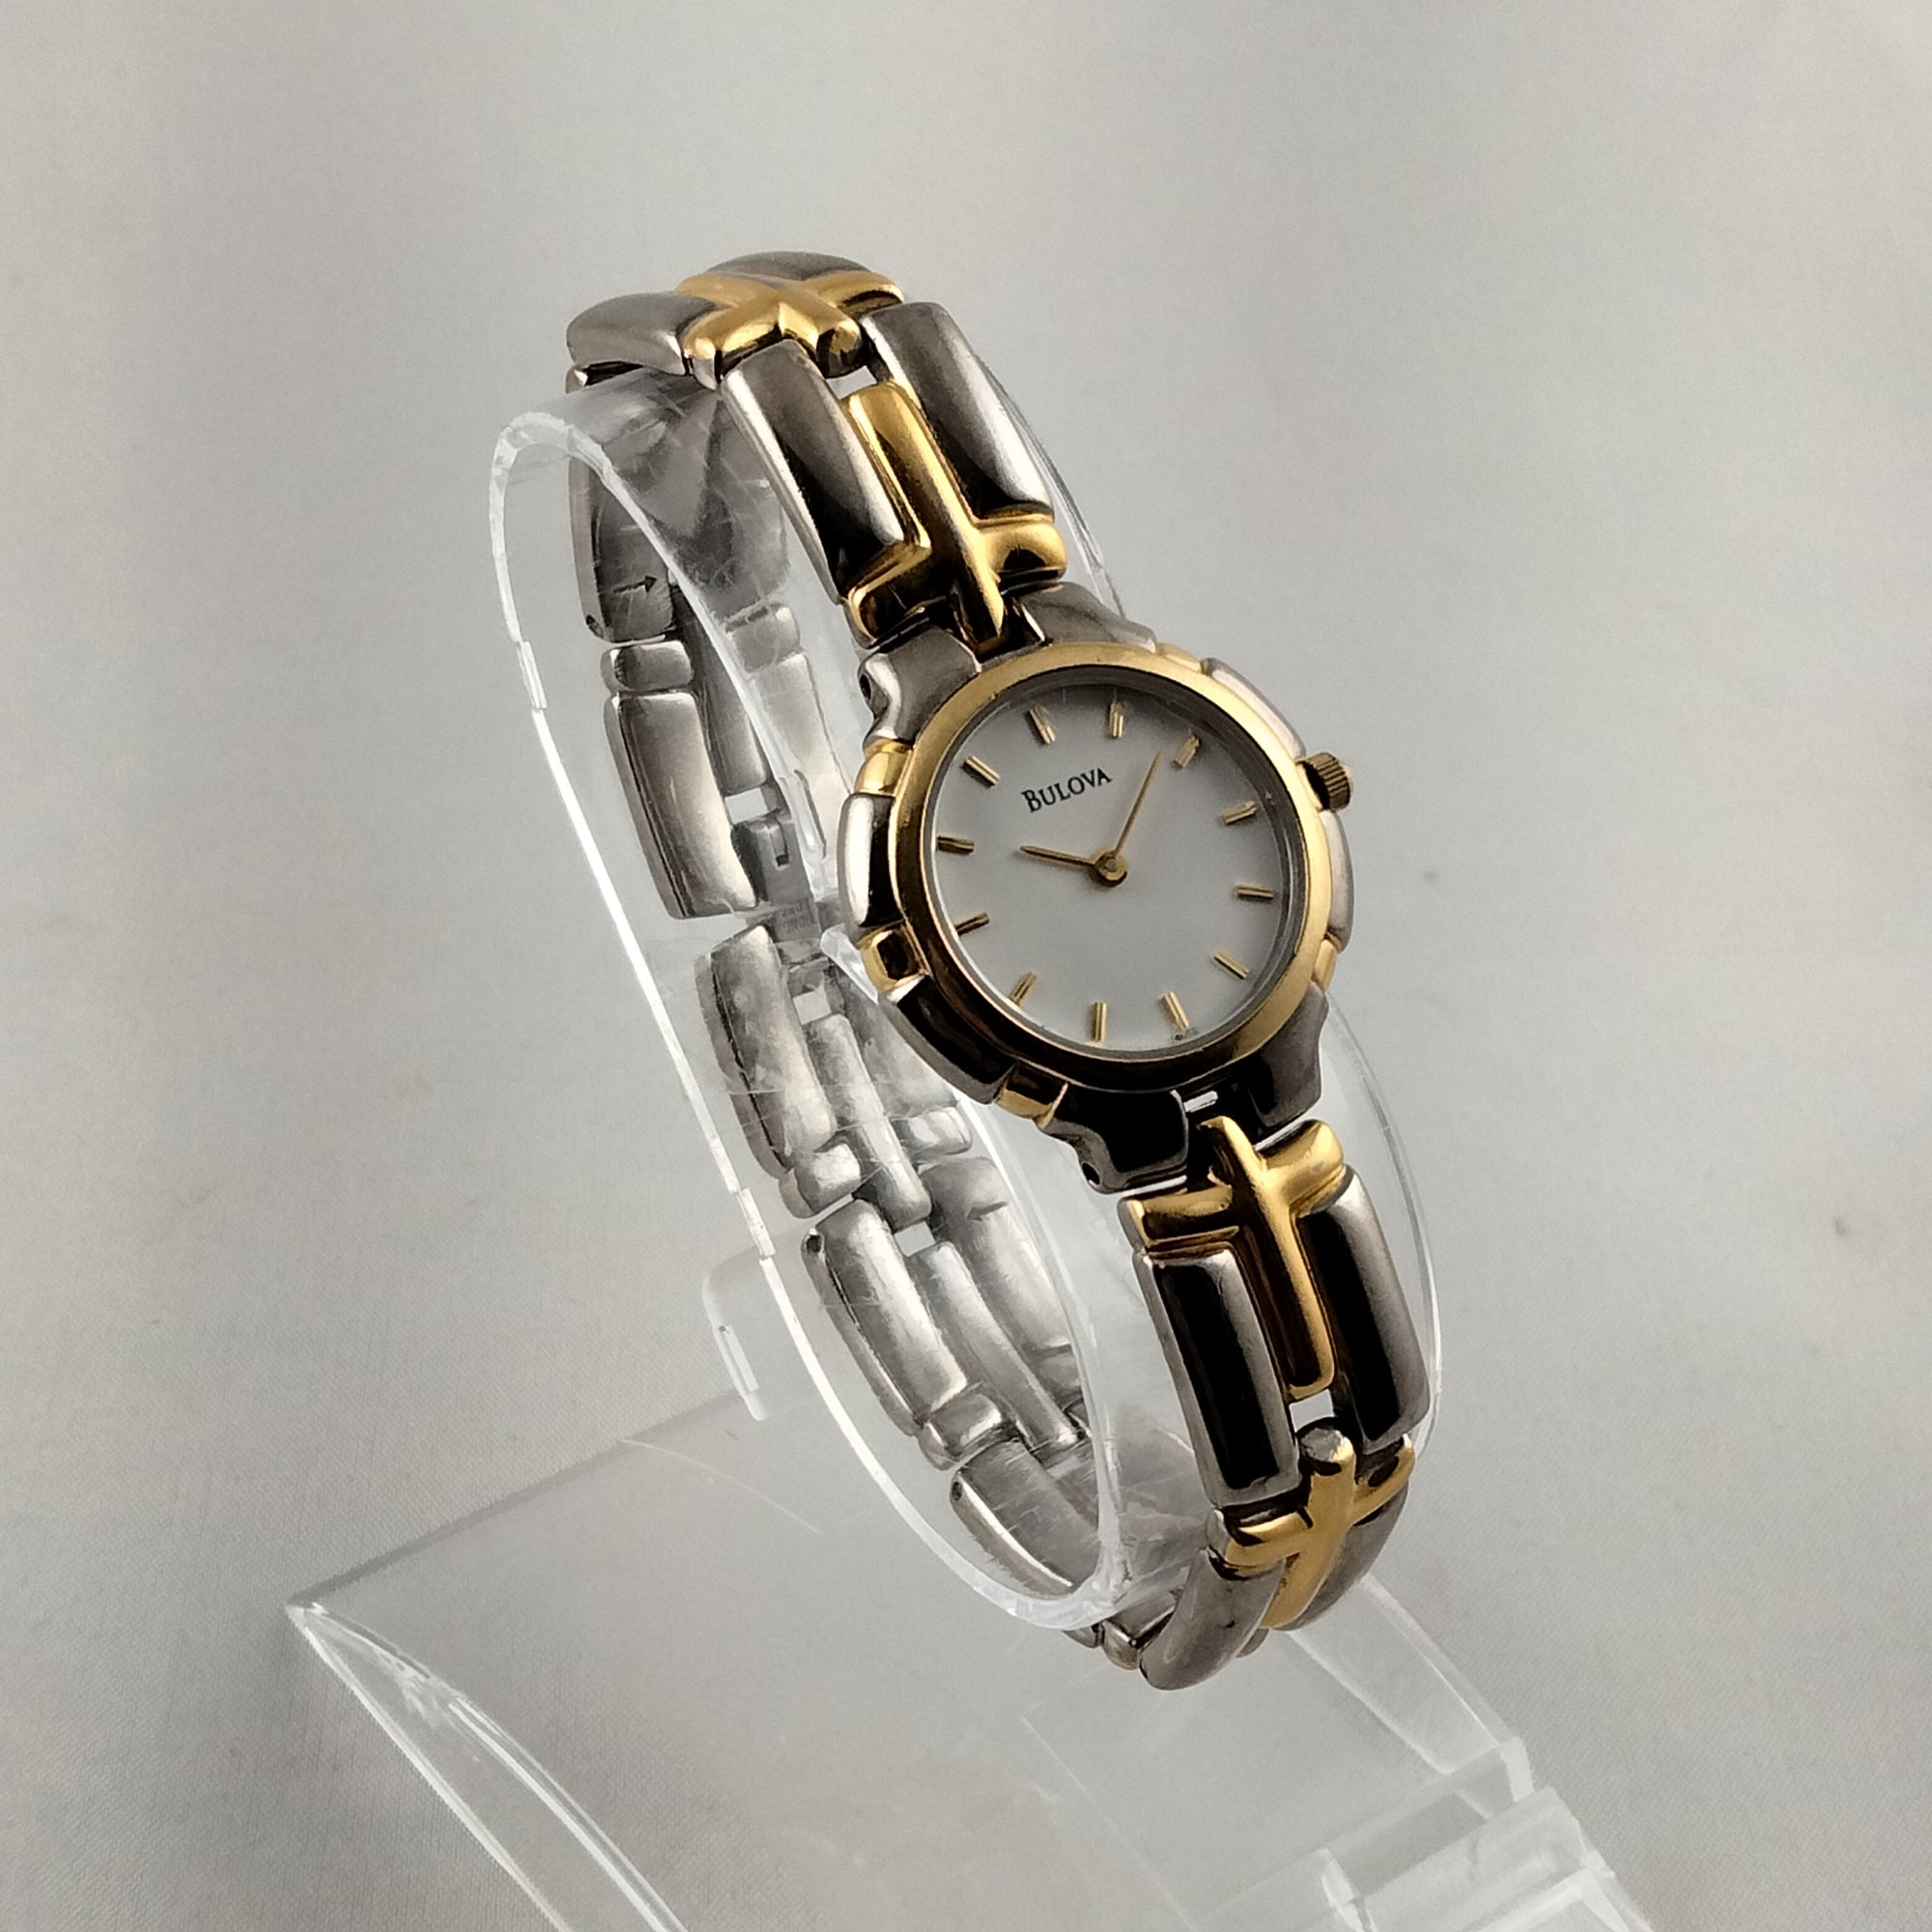 Bulova Unisex Silver and Gold Tone Watch, White Dial, Bracelet Strap